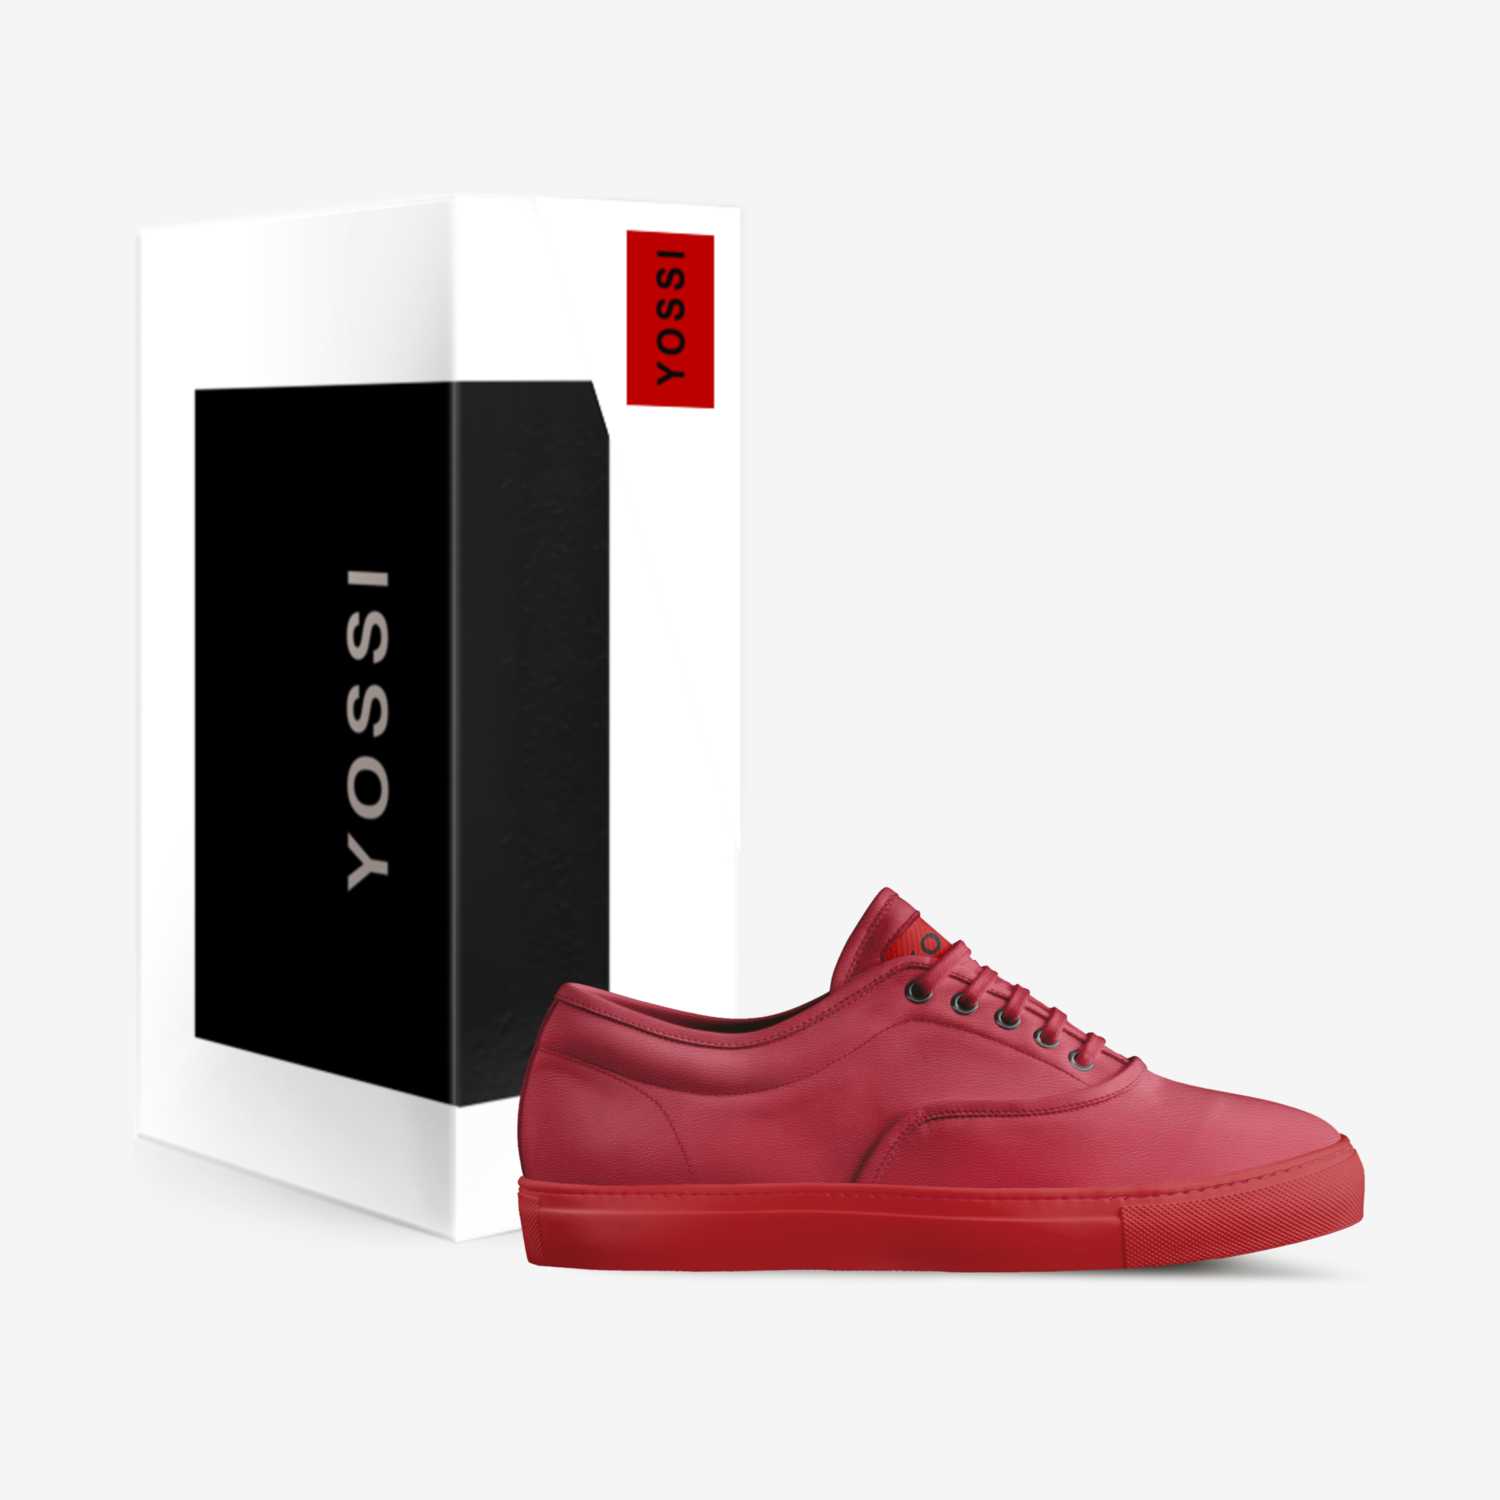 Yossi  custom made in Italy shoes by Yossi Benshetrit | Box view